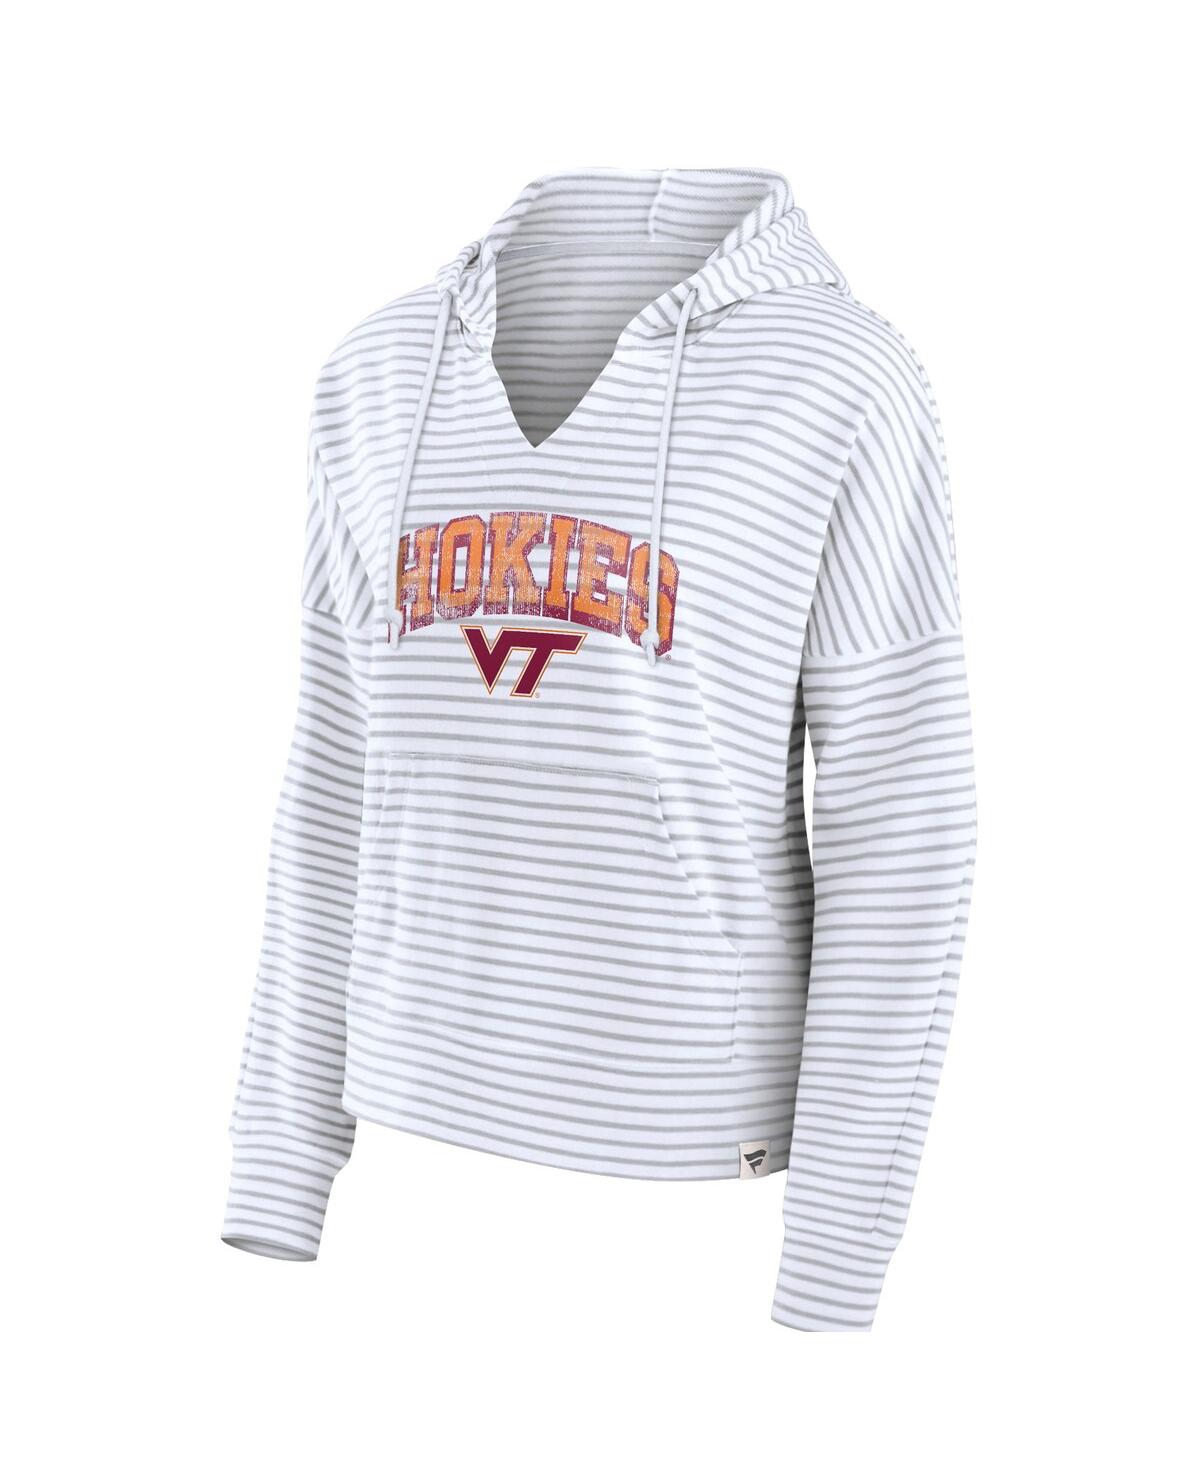 Shop Fanatics Women's  White Virginia Tech Hokies Striped Notch Neck Pullover Hoodie